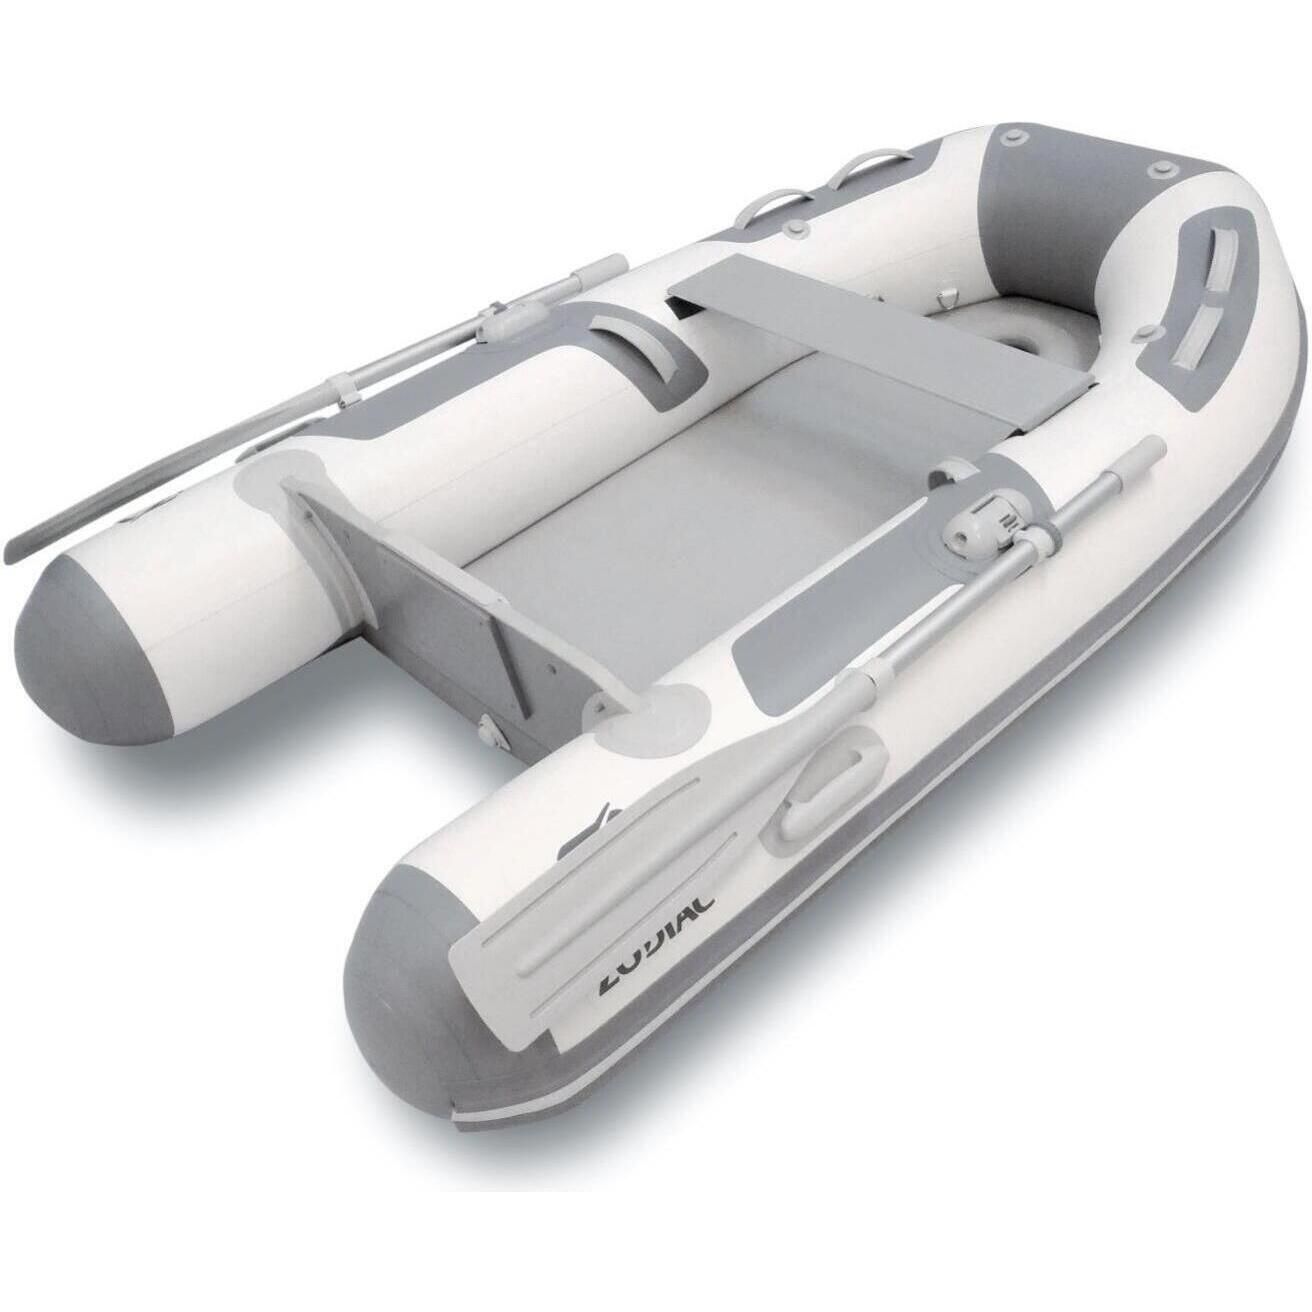 AIRE Inflatable Boat Repair Kit - C7/D7